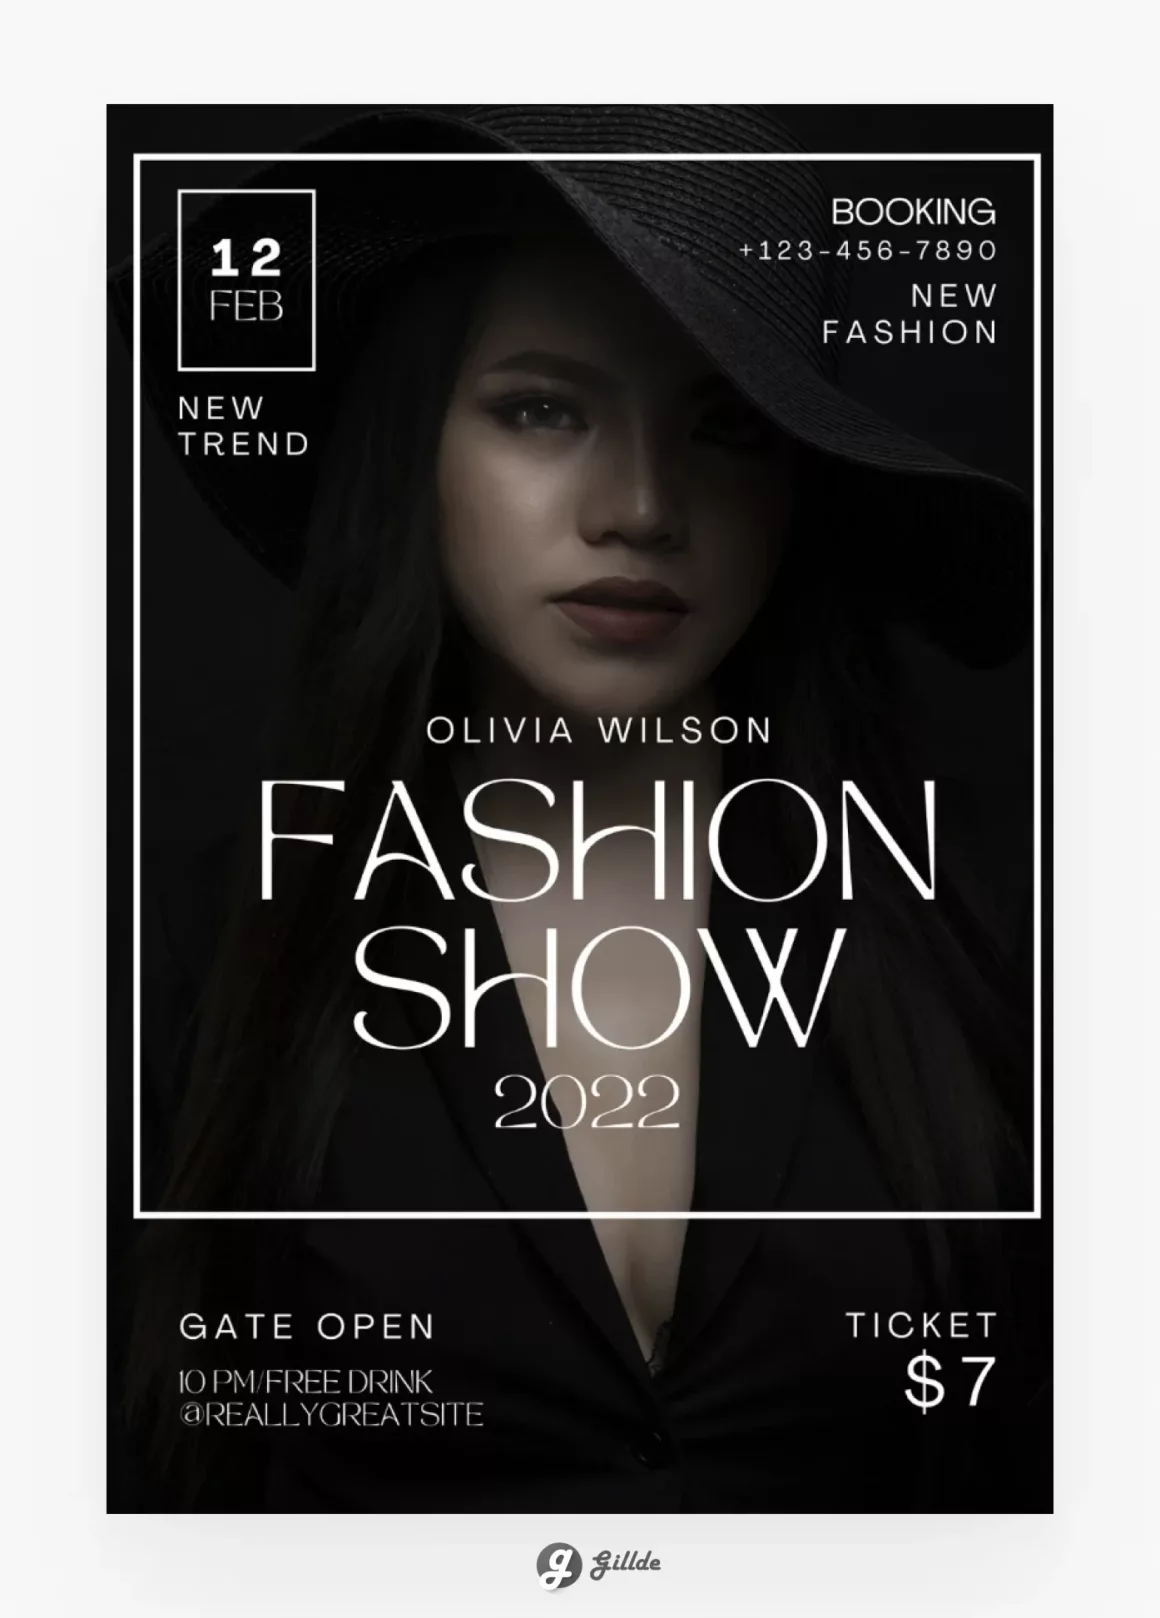 stylish Canva templates for fashion event invites